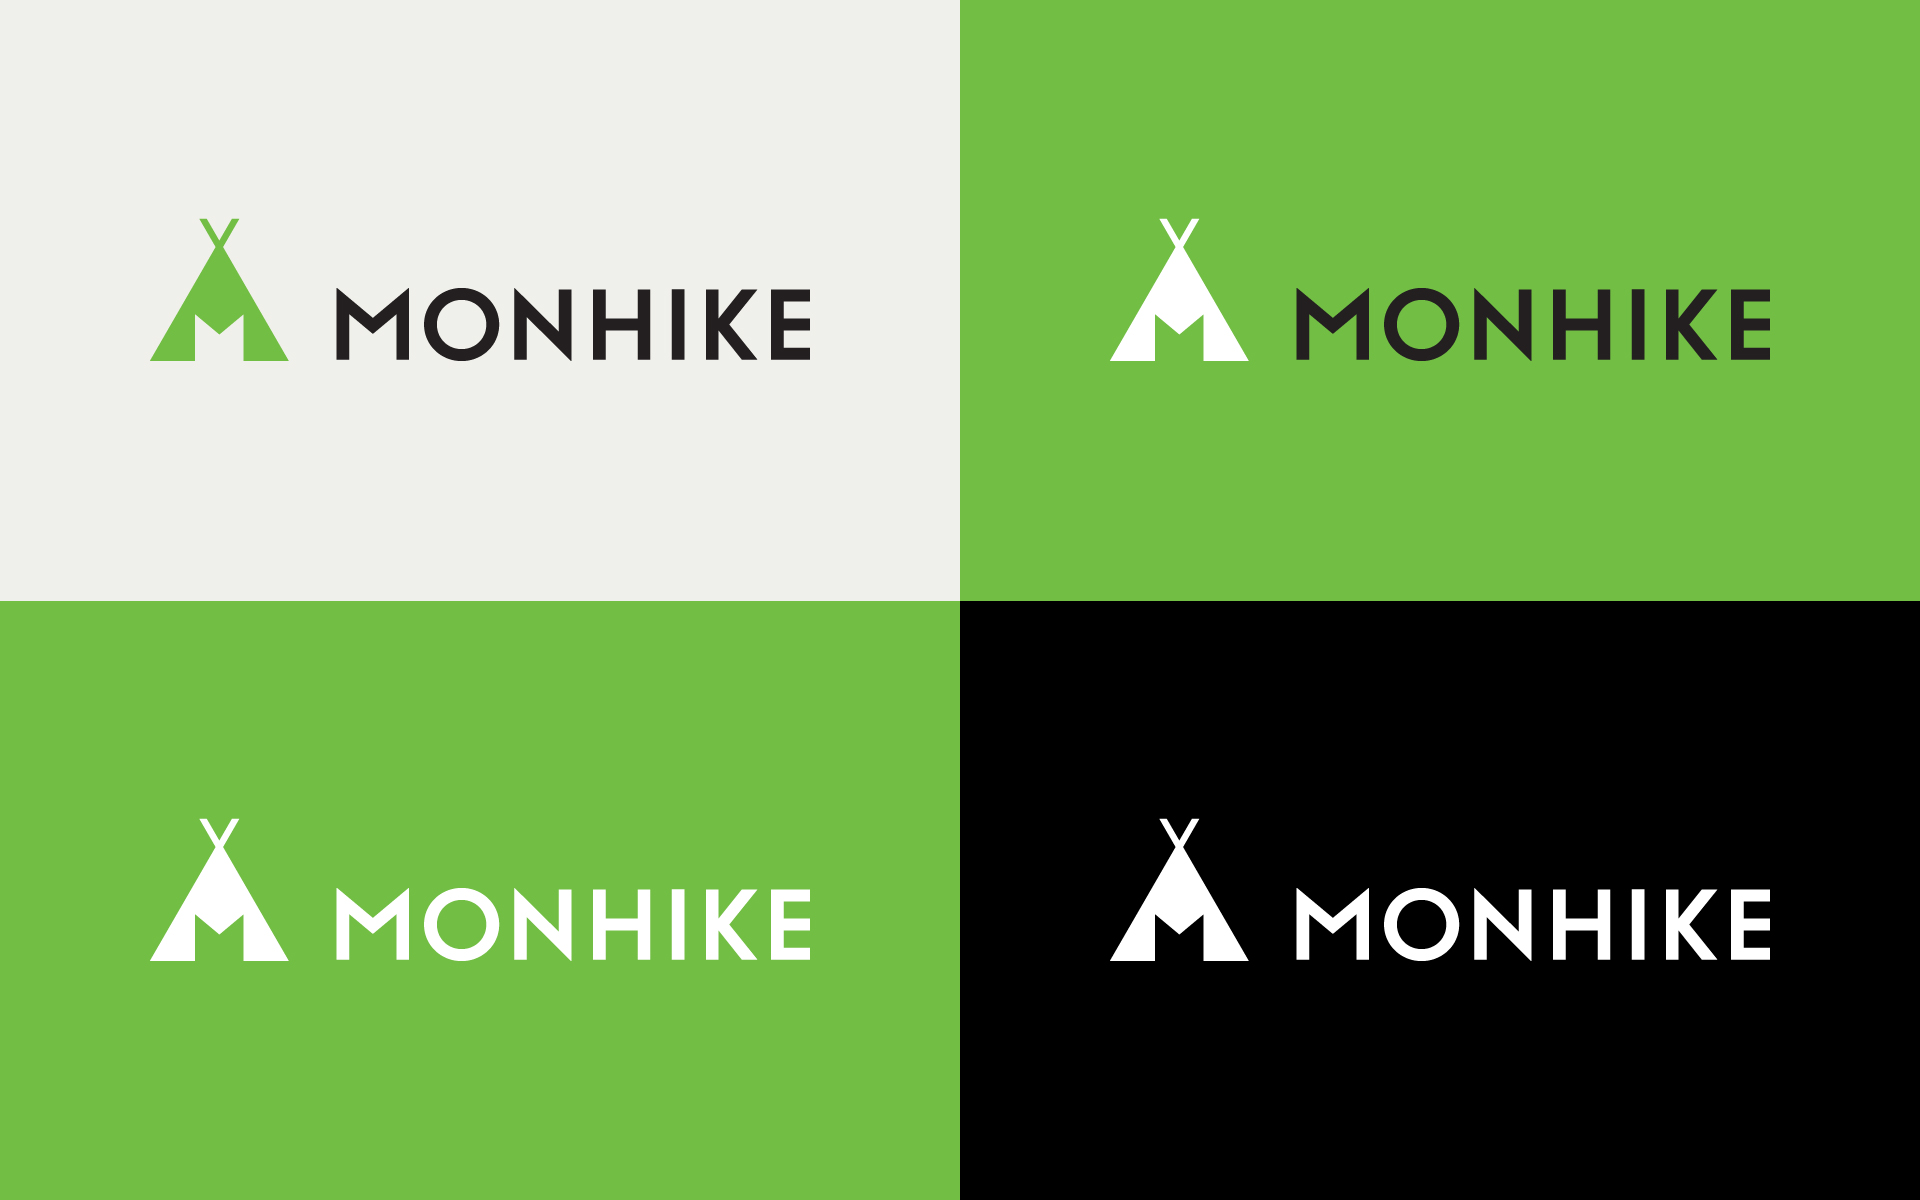 Monhike secondary logo variations